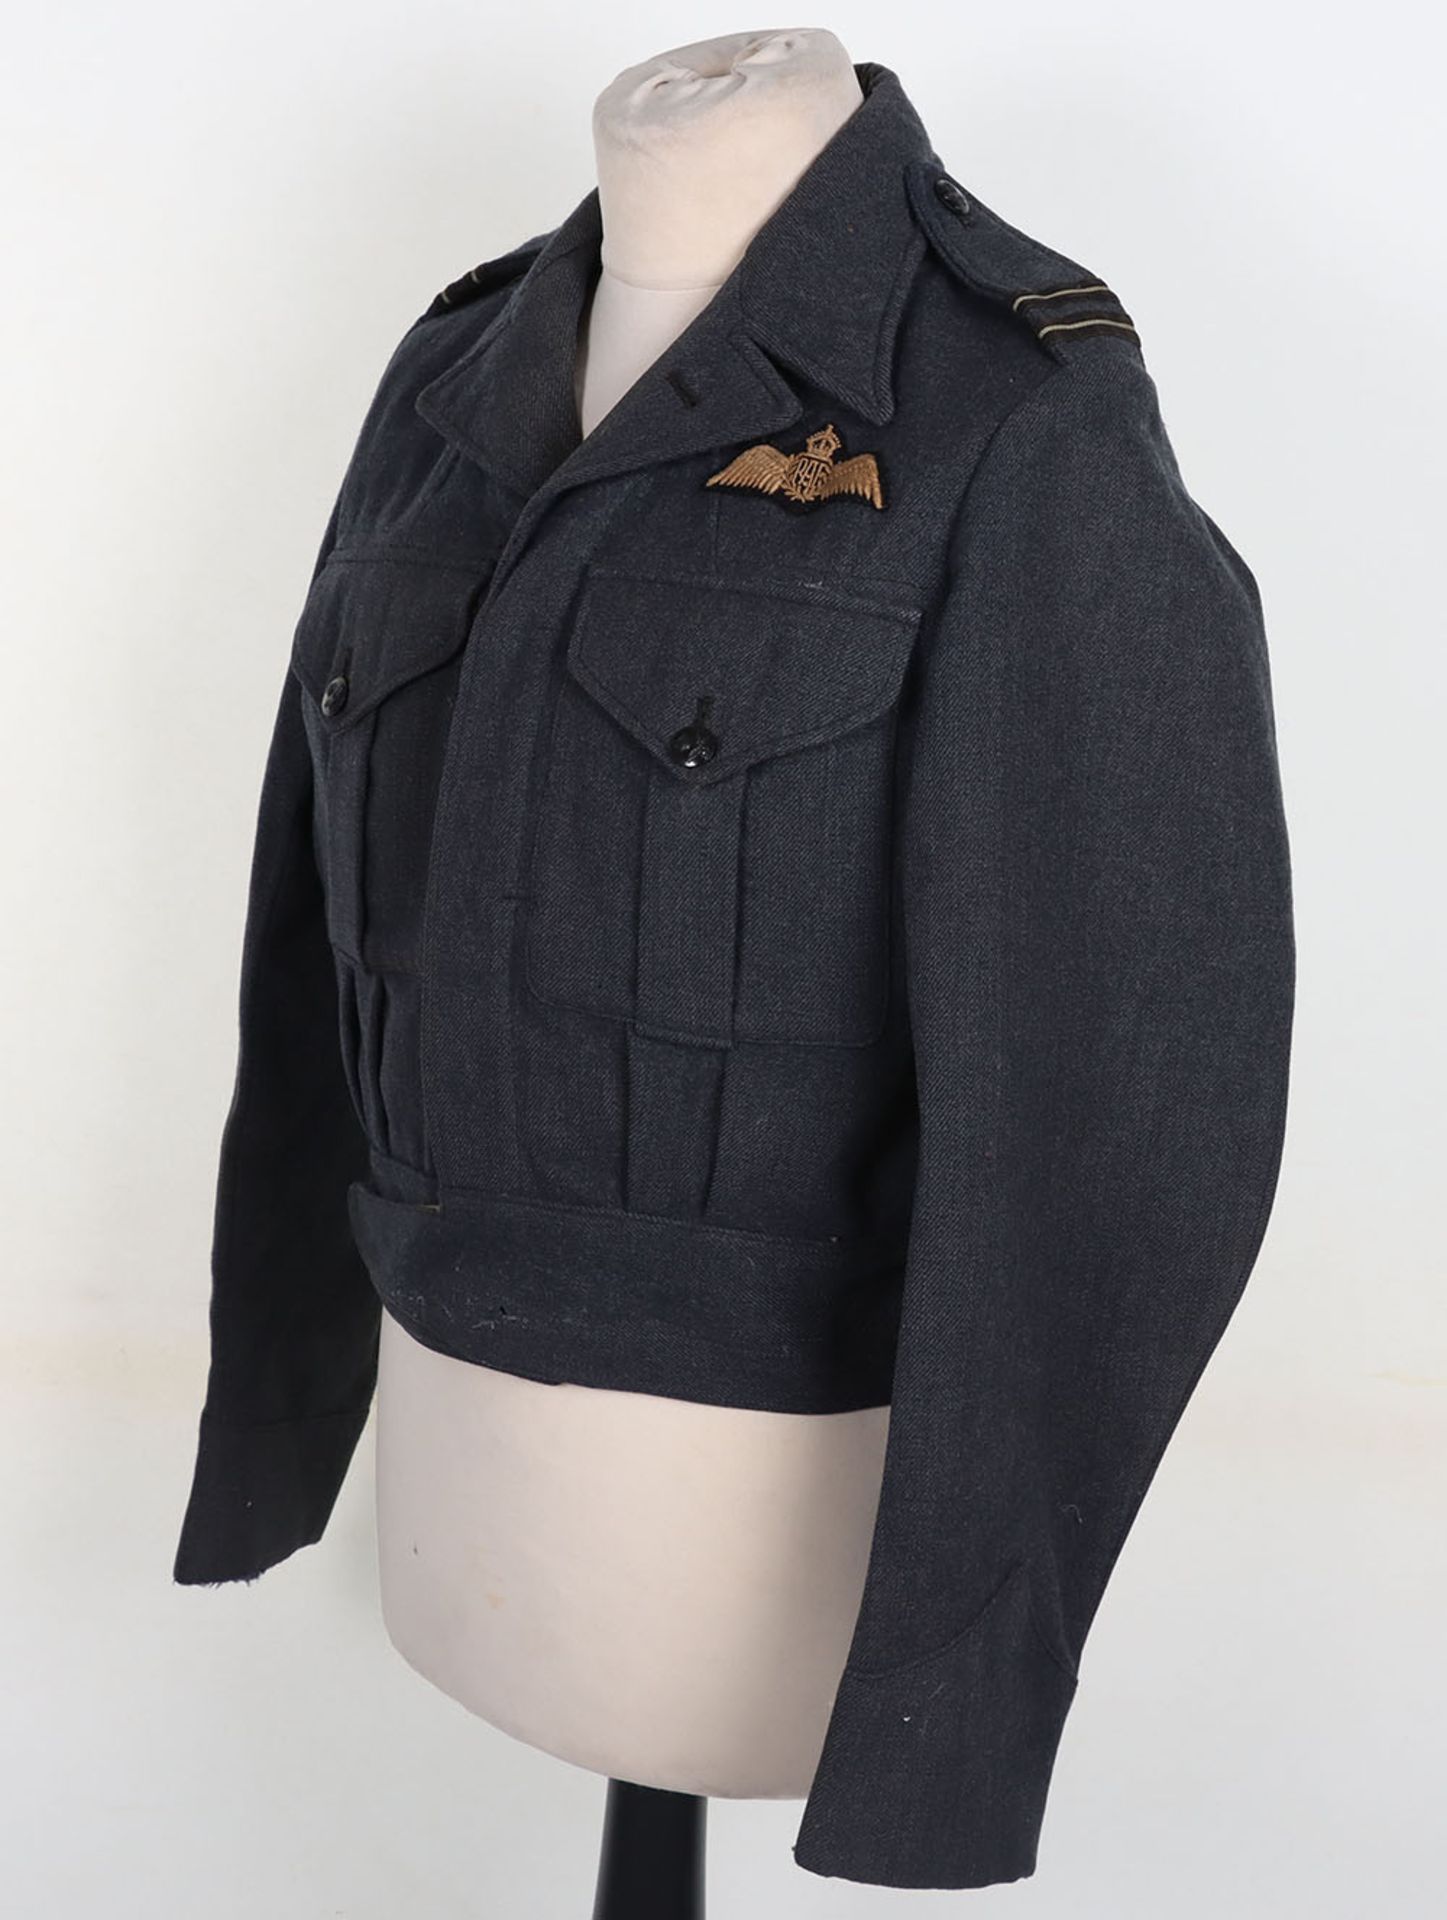 Post WW2 Royal Air Force Pilots Battle Dress Blouse - Image 3 of 8